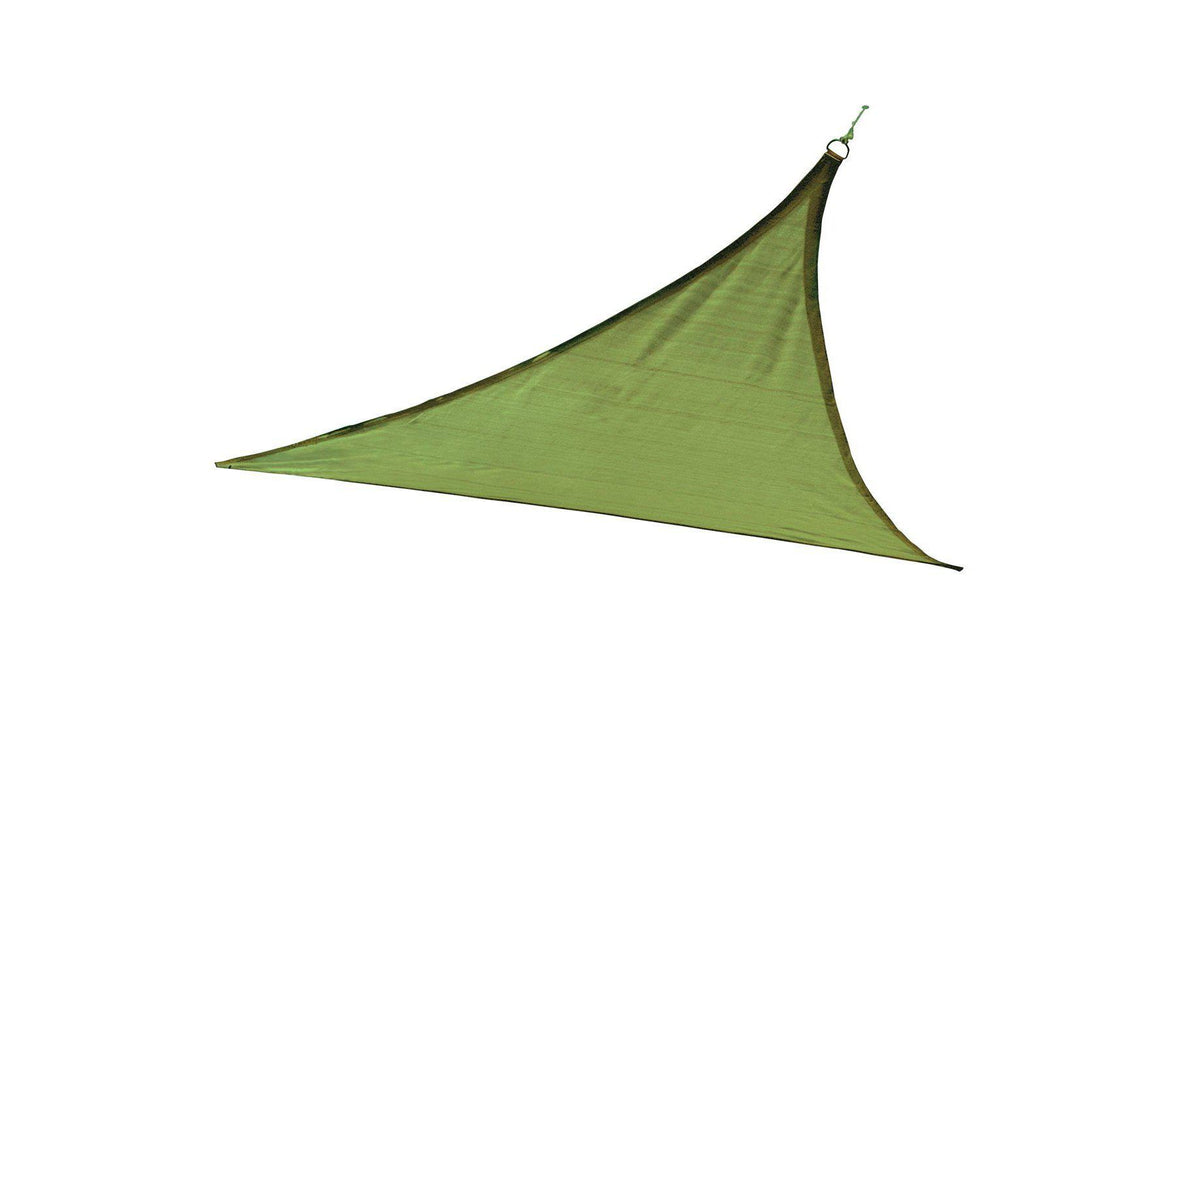 ShelterLogic Triangle Shade Sail, Lime Green, 12 x 12 x 12 ft.